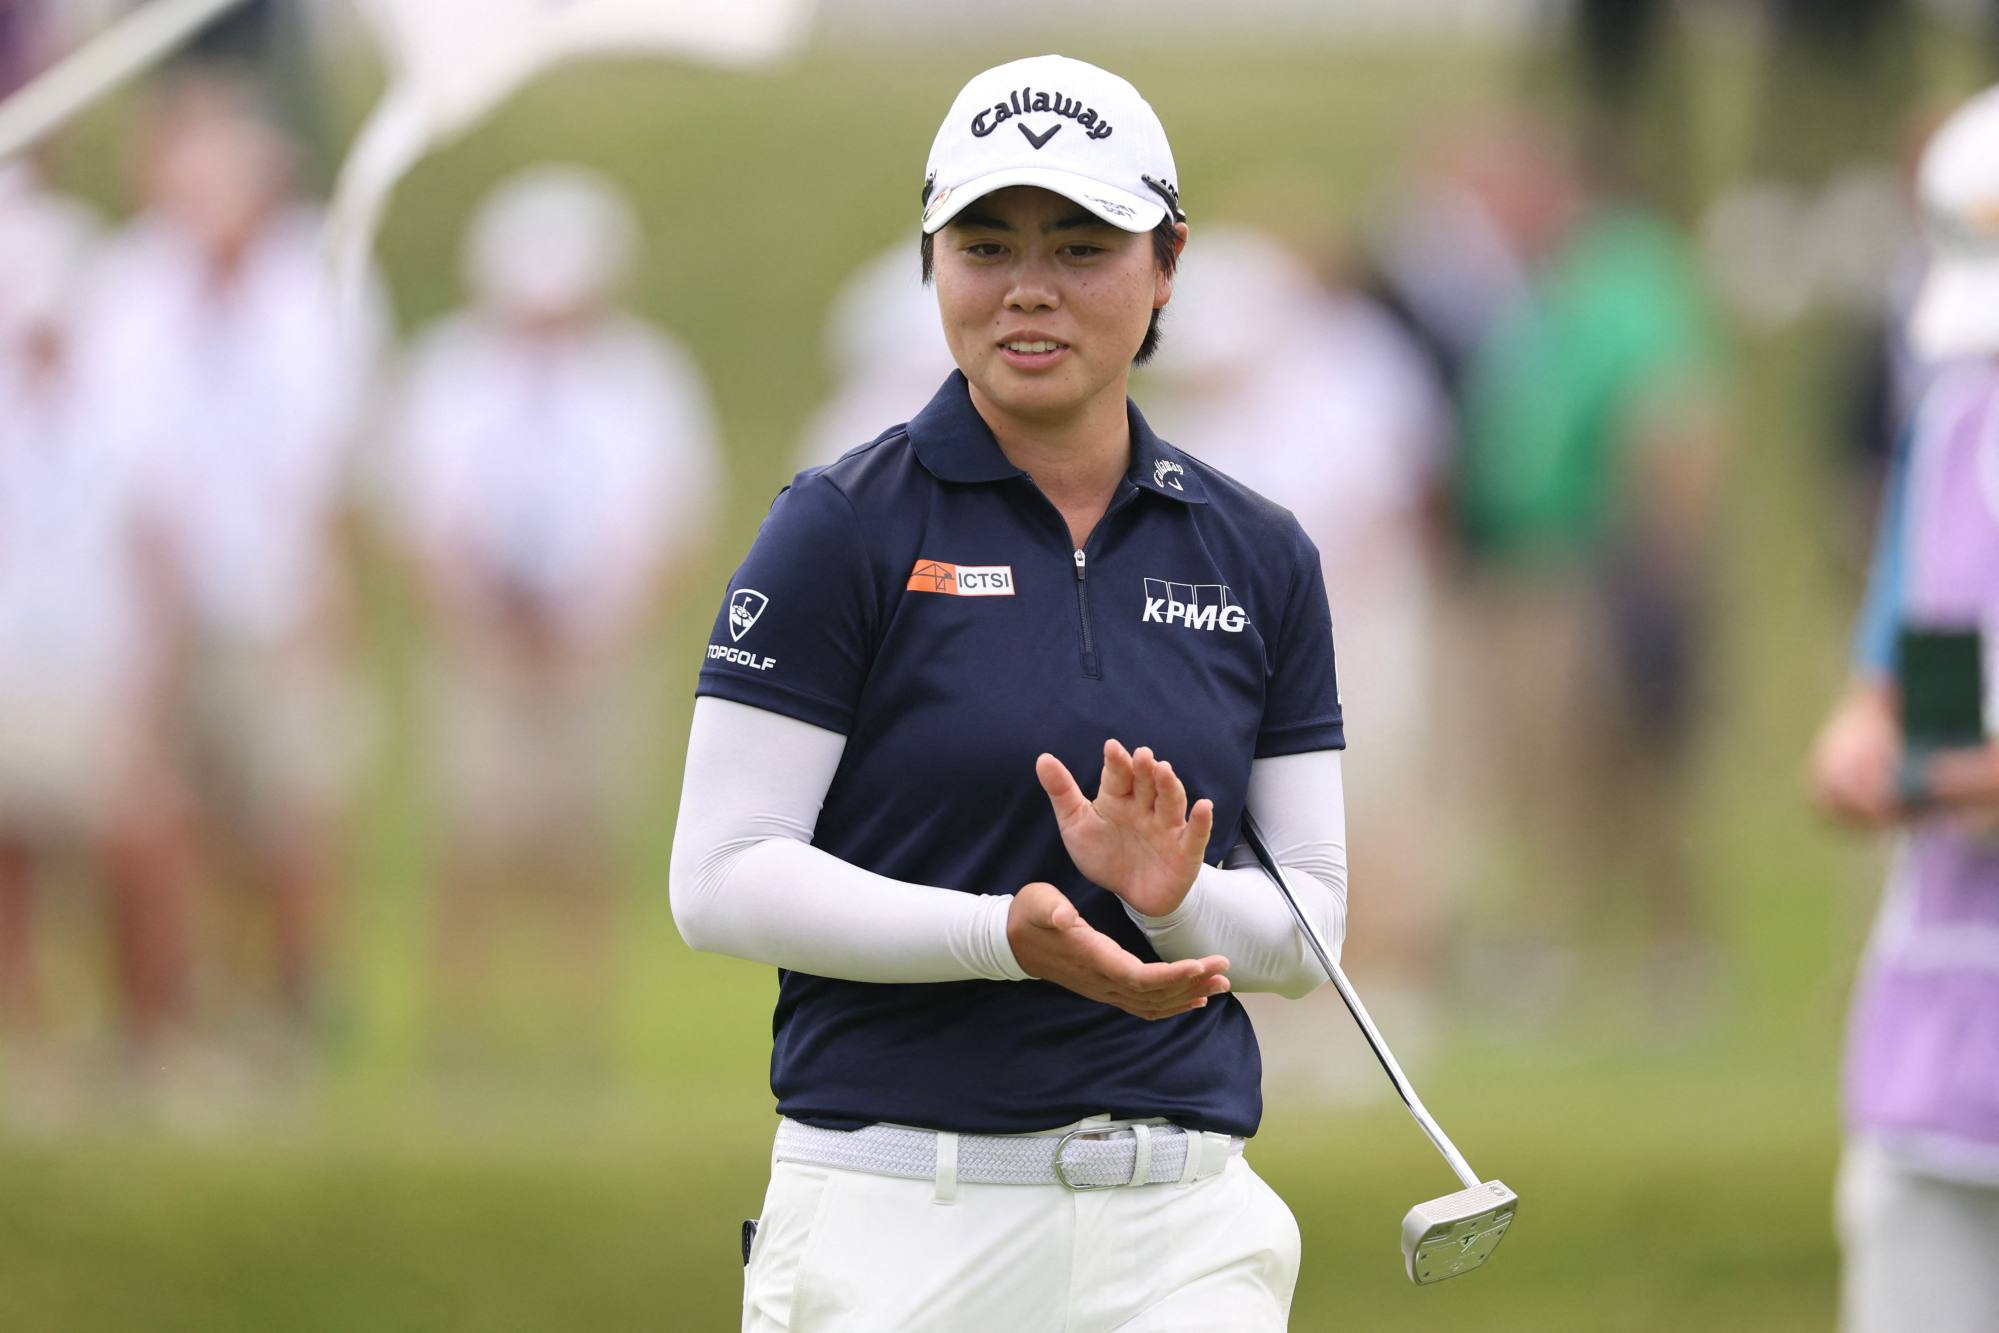 China’s Yin claims maiden major at Women’s PGA Championship | South ...